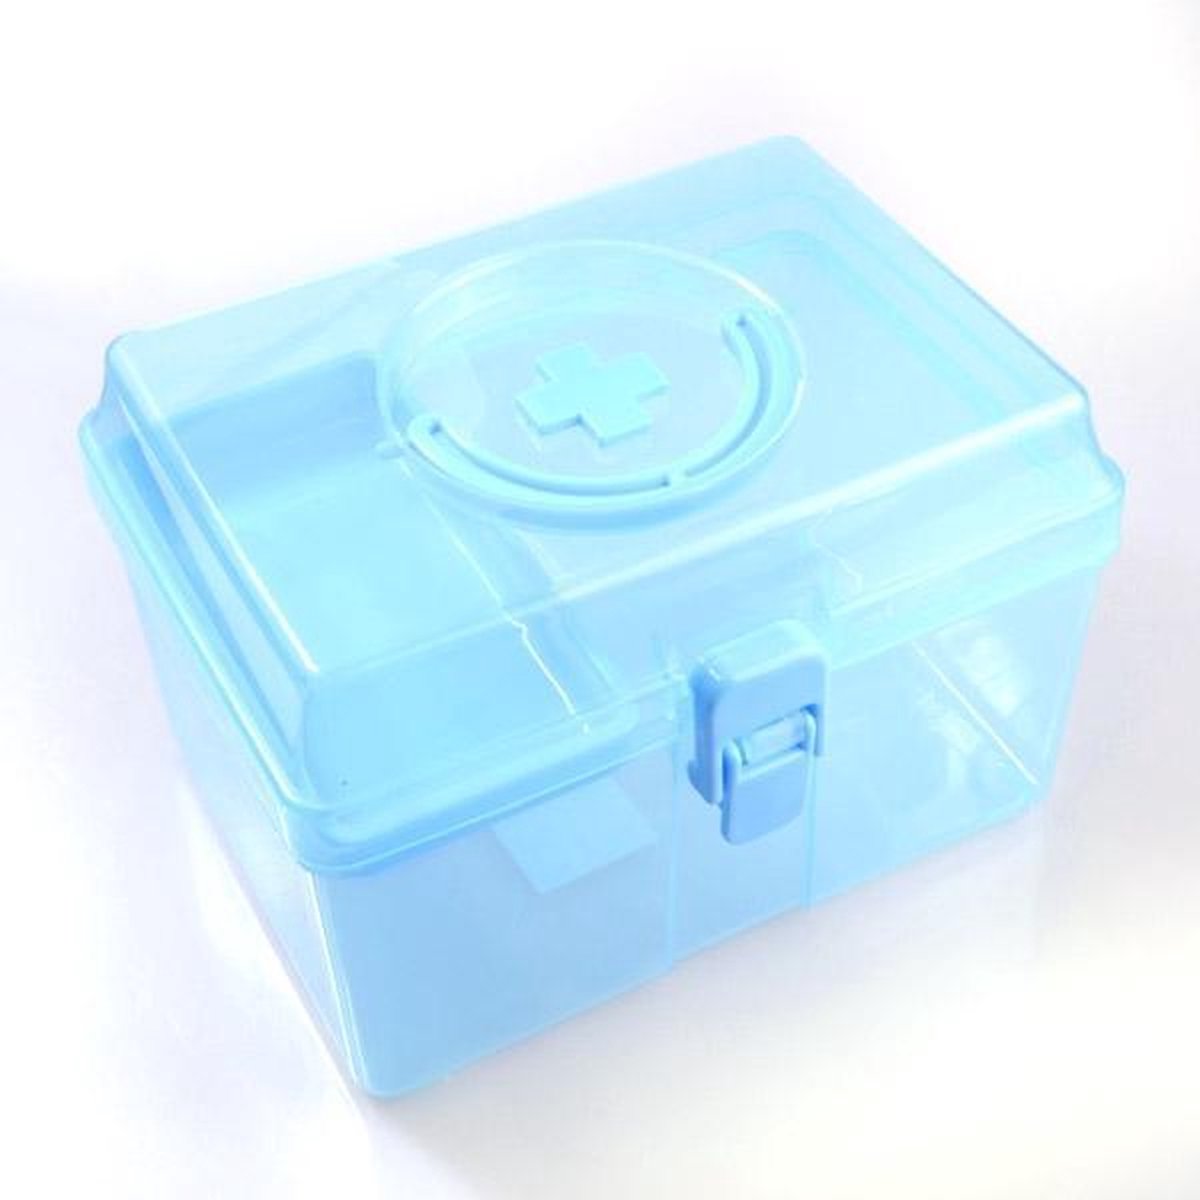 Qatrixx EHBO Set Medicijn Box Groot - Transparant / Blauw